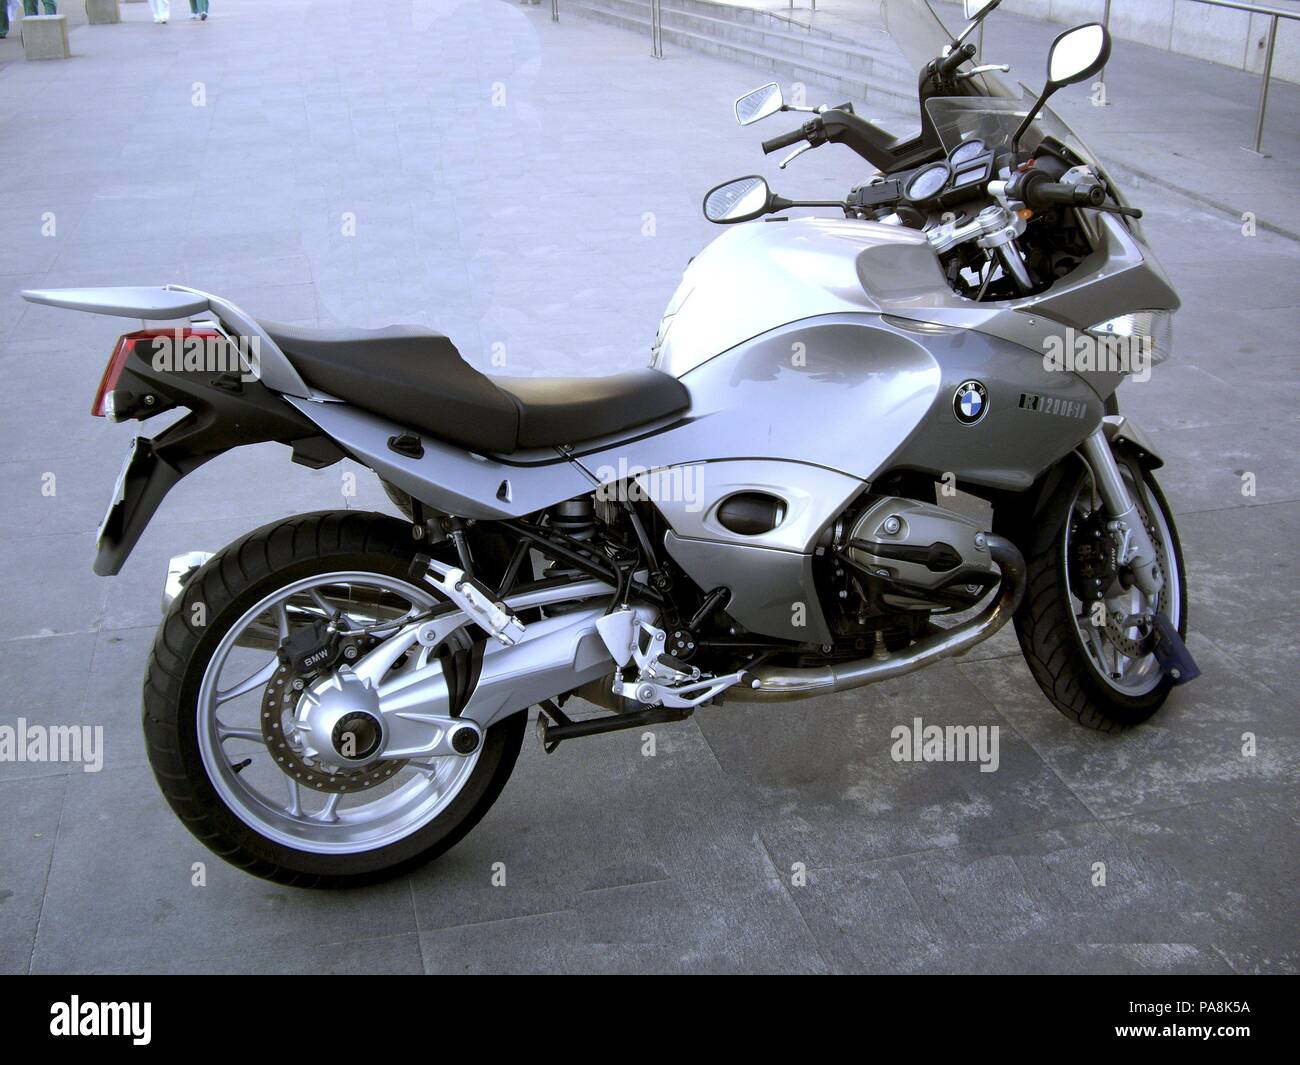 MOTO BMW R1200ST. Location: EXTERIOR, MADRID, SPAIN Stock Photo - Alamy